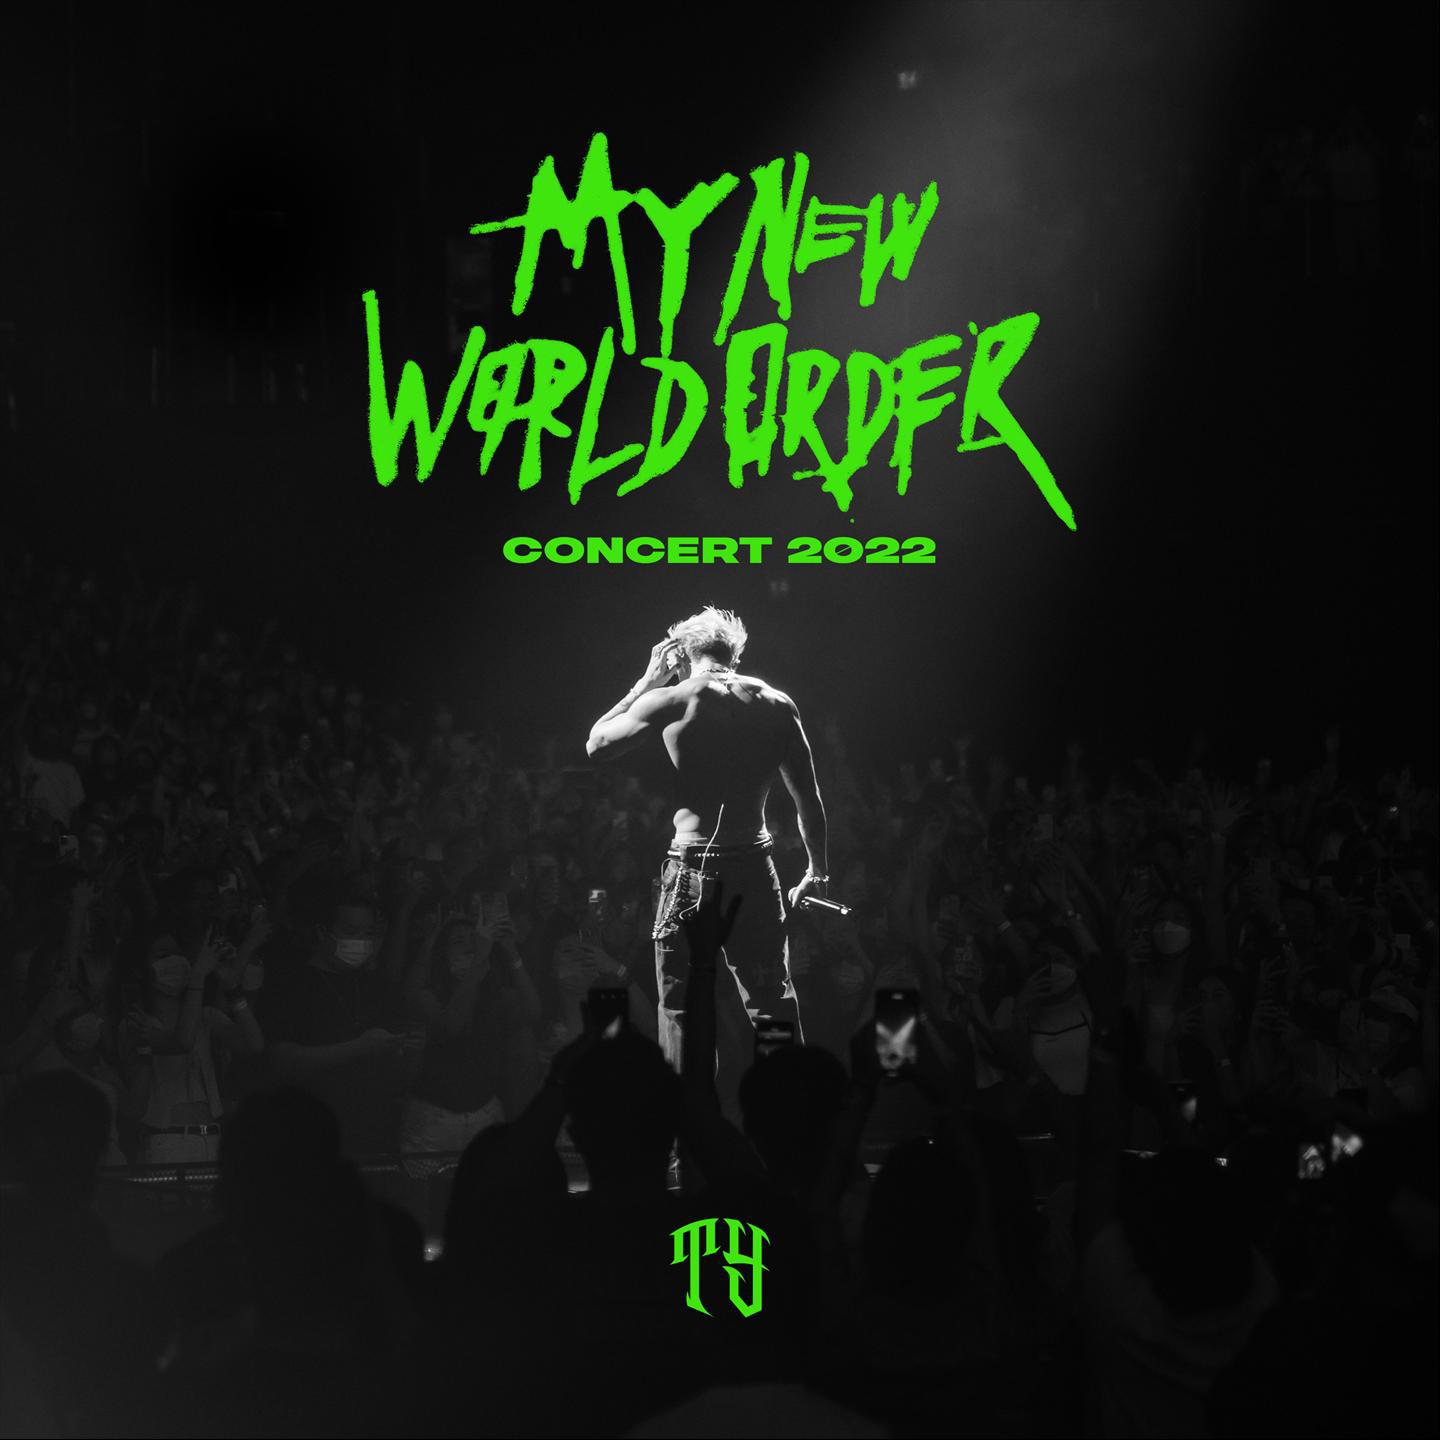 Tyson Yoshi - my new world order (Live)